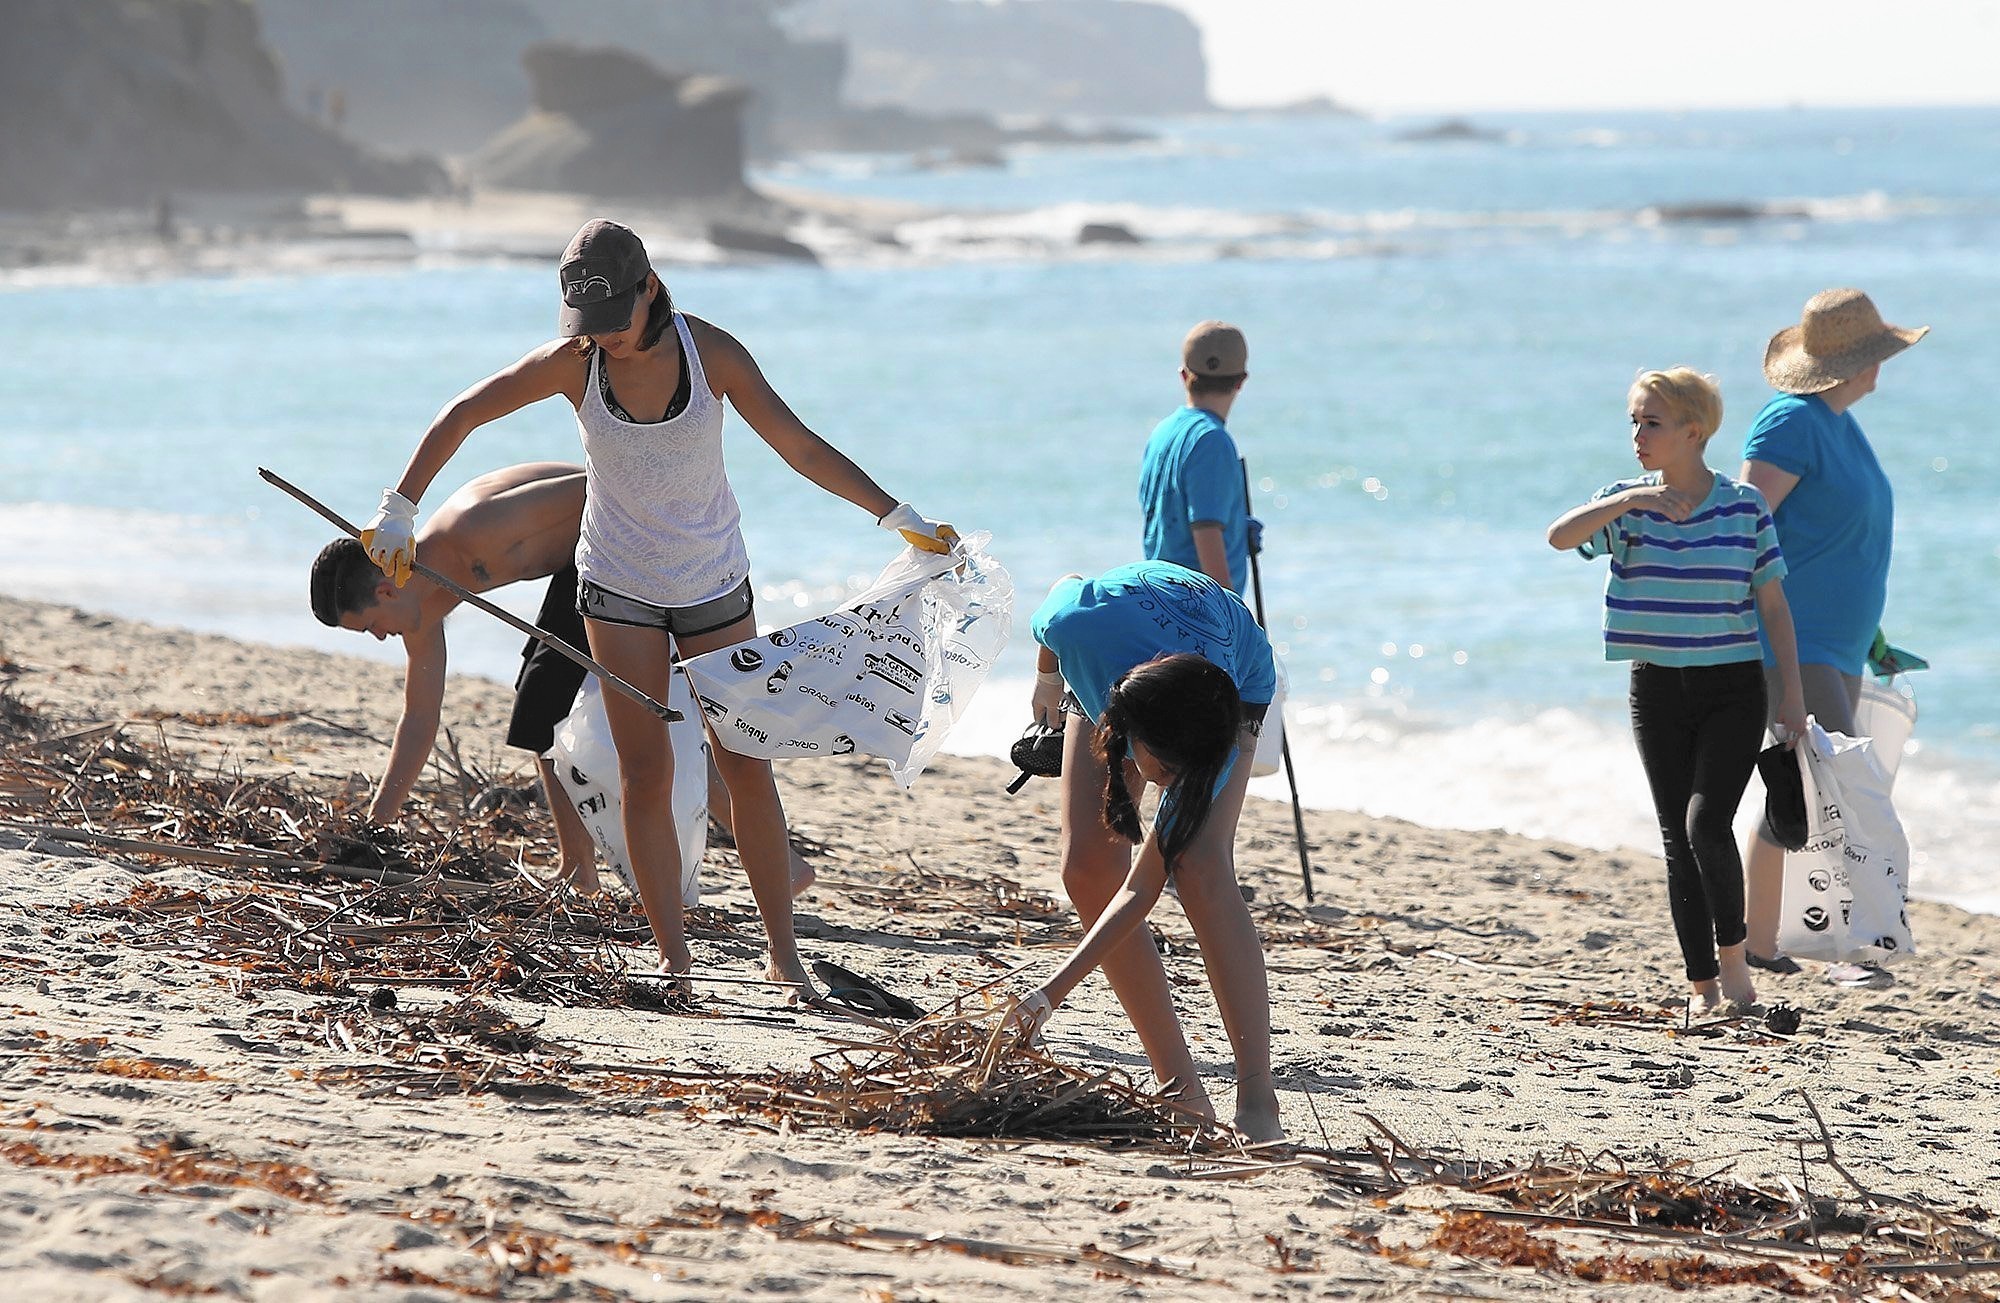 Beach clean up. Уборка пляжа. Оборку к пледу. Убирают пляж.